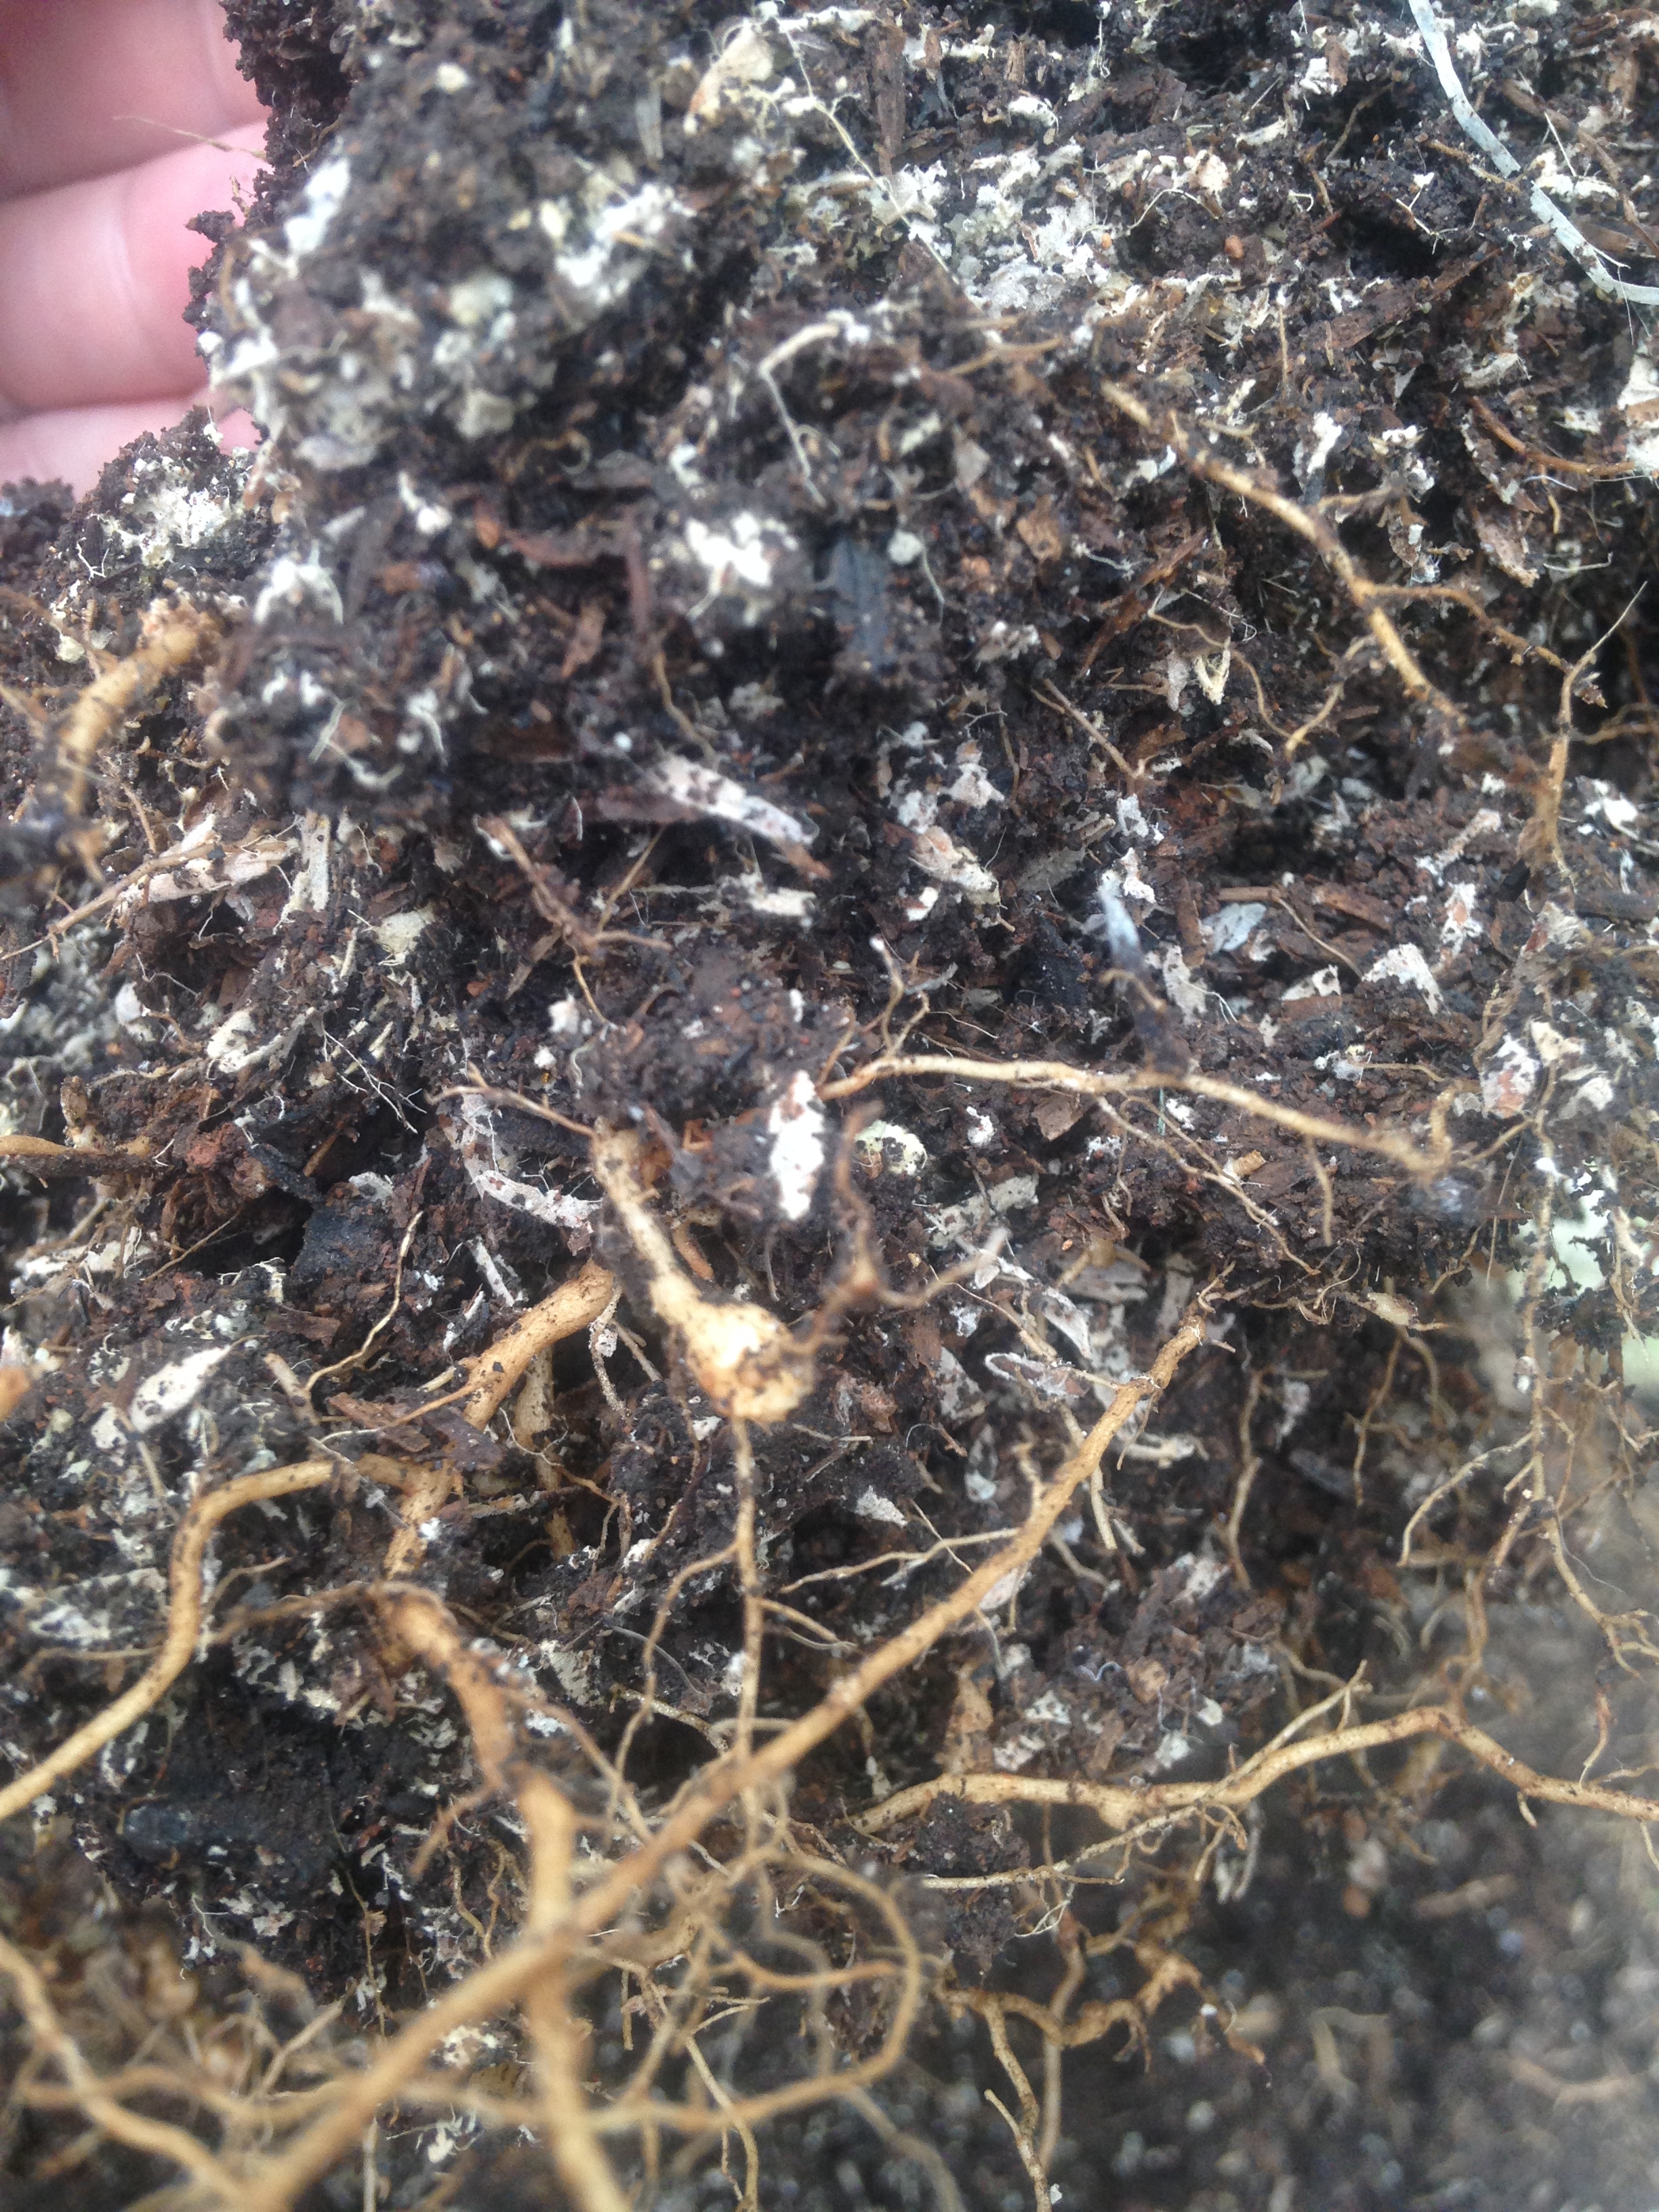 White stuff in soil Extension